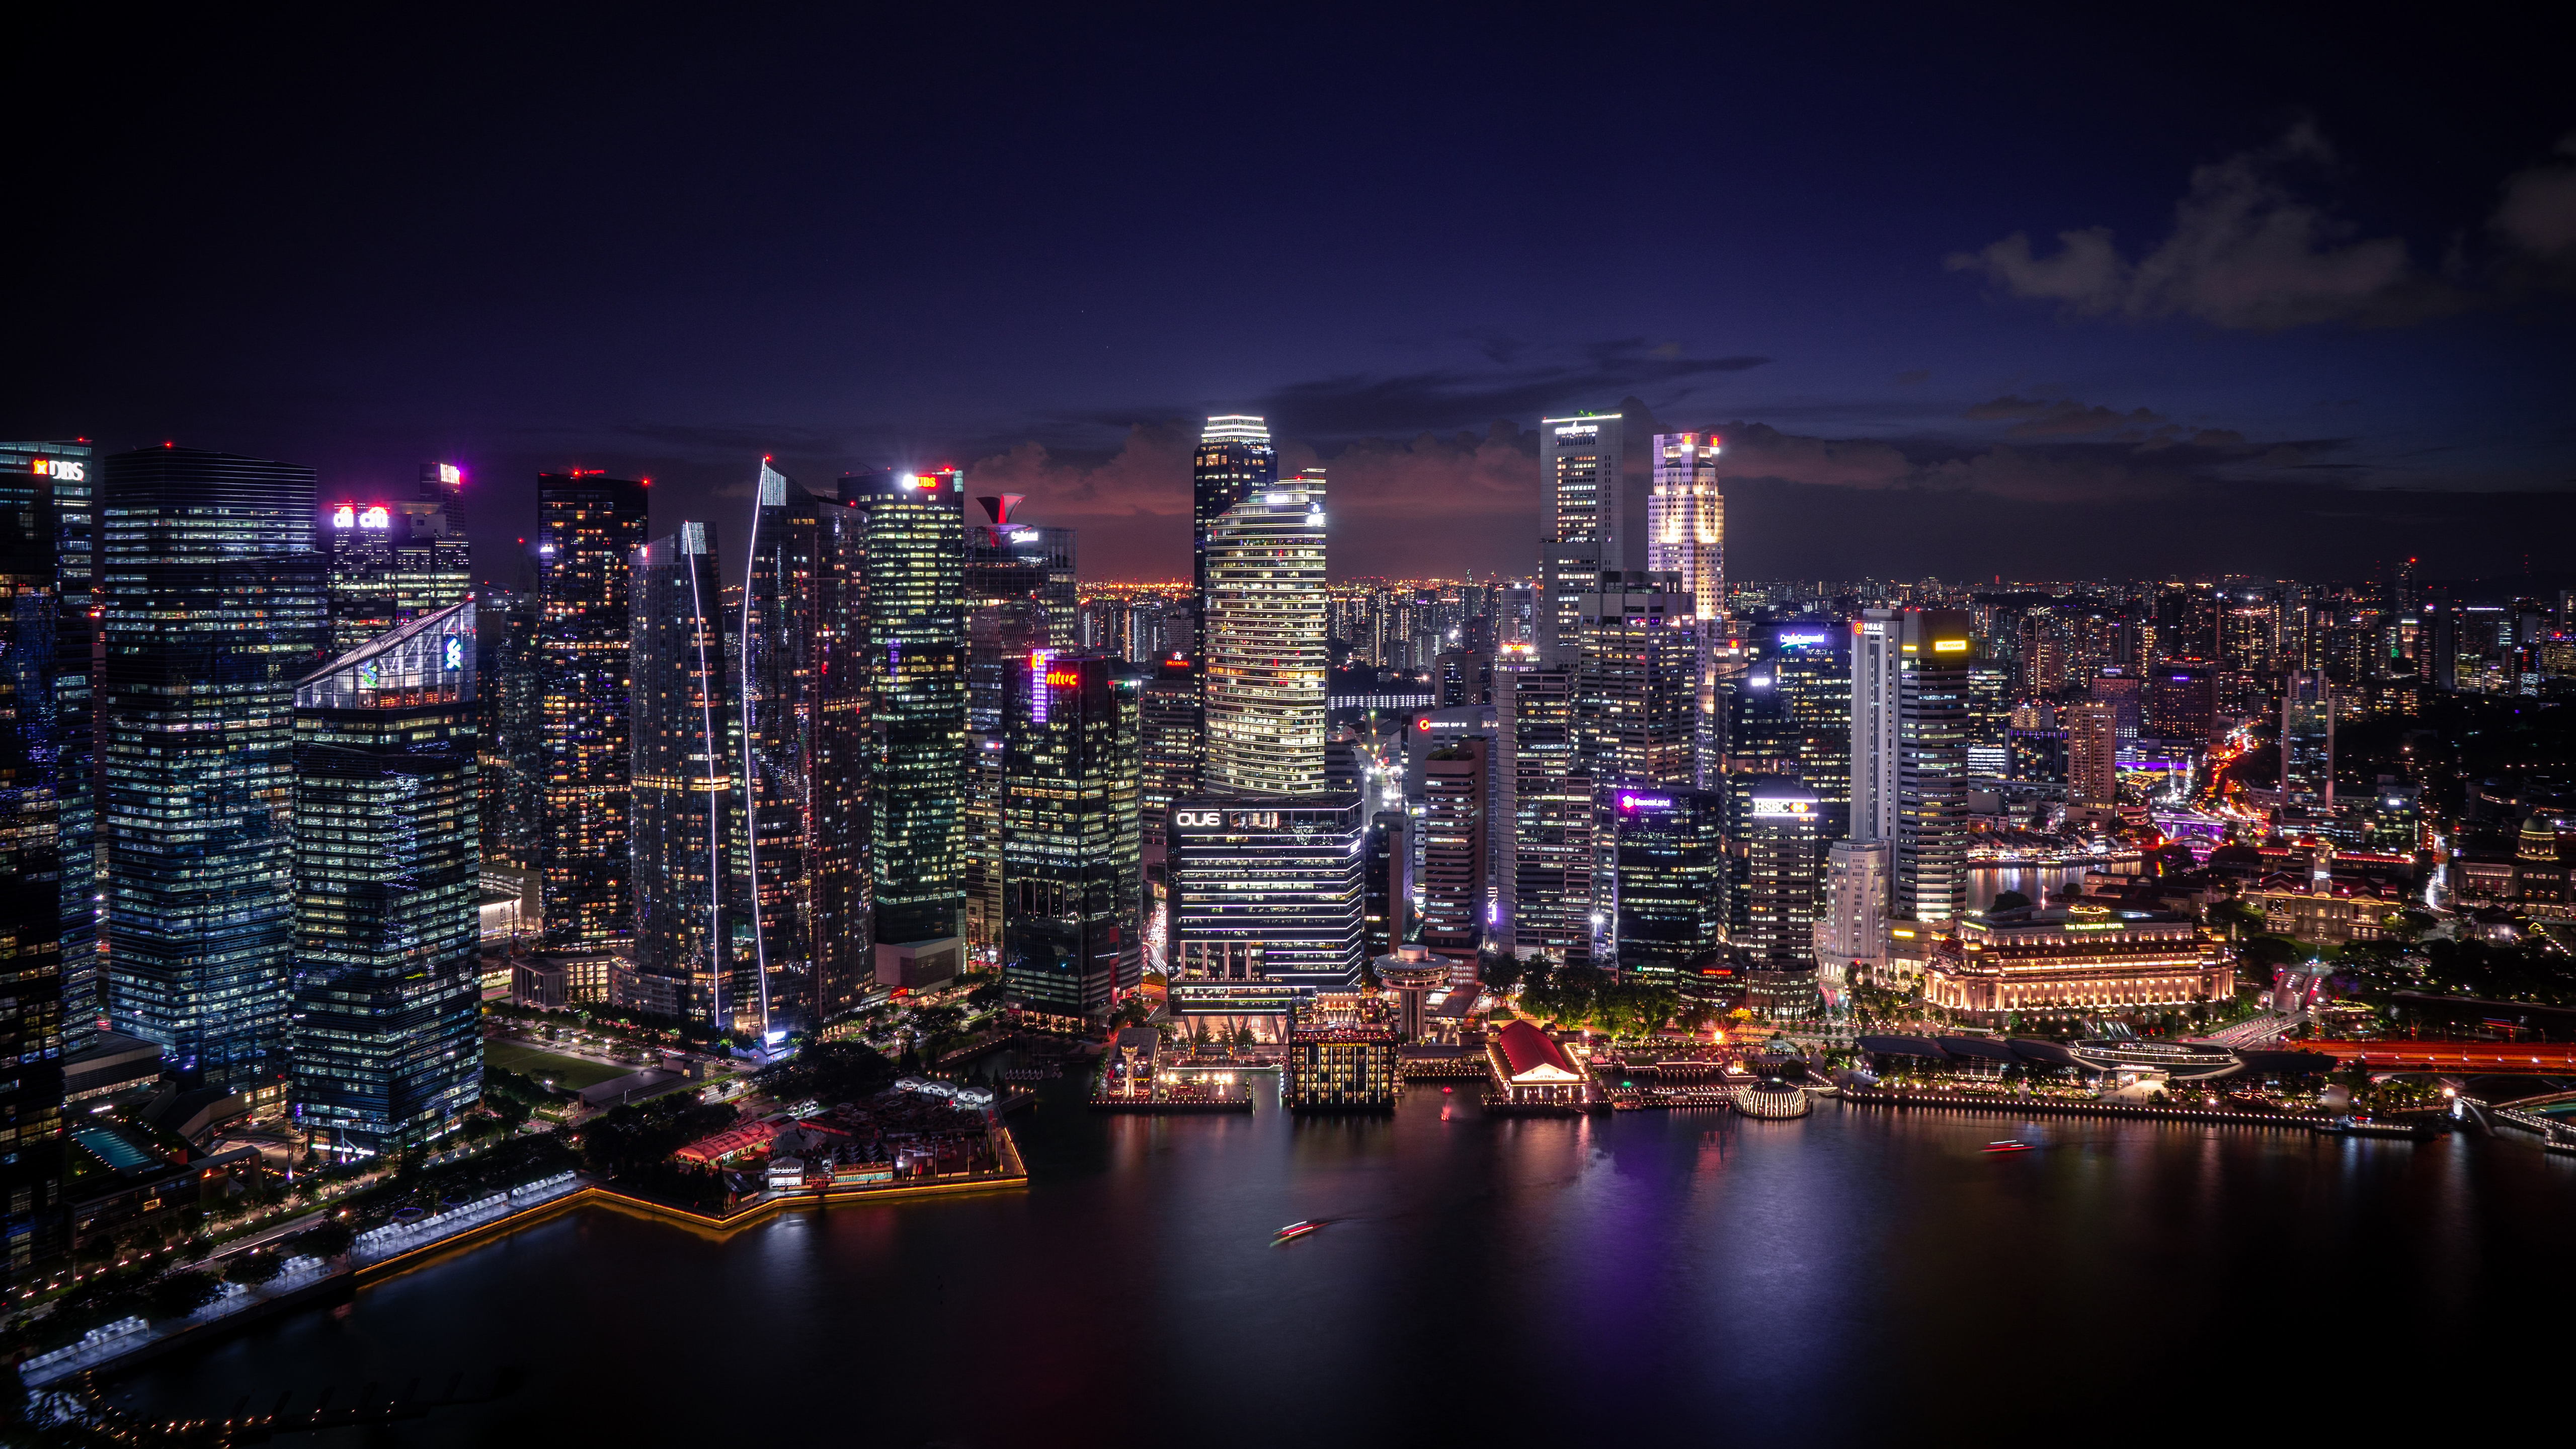 Сингапур небоскребы